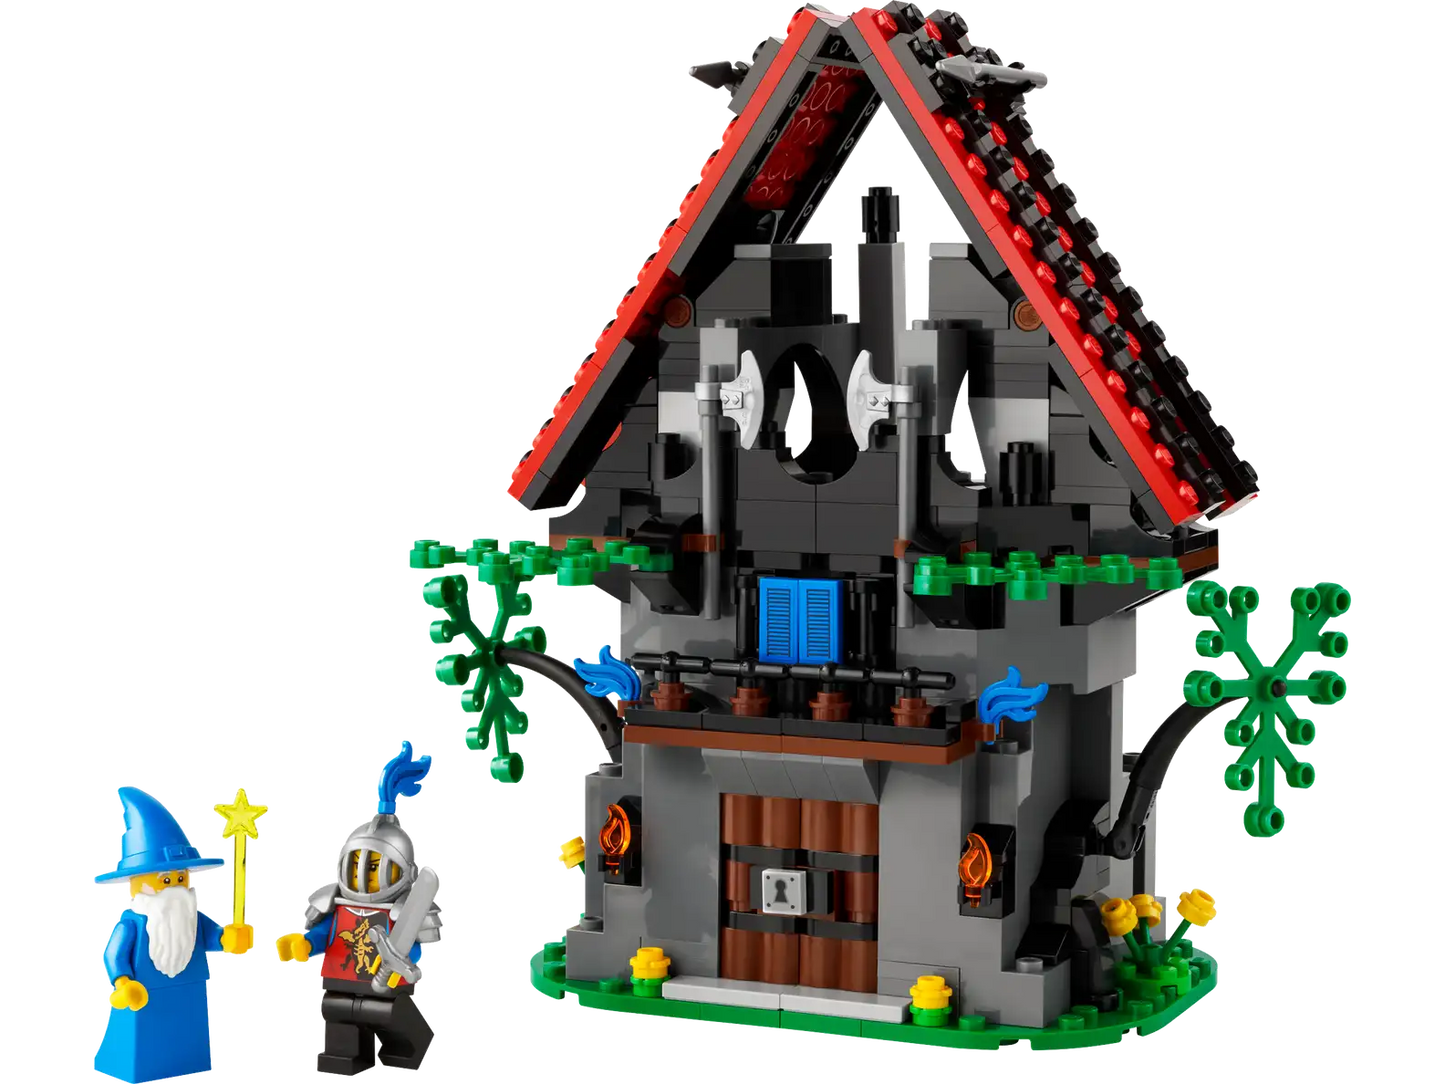 Lego Workshop 40601